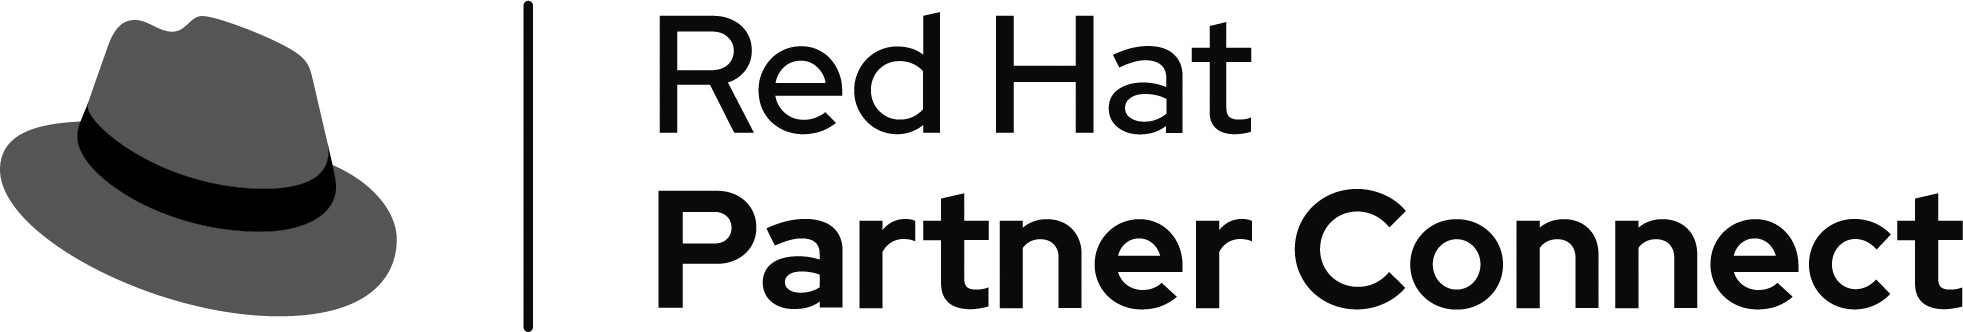 Red_Hat-Partner_Connect-logo